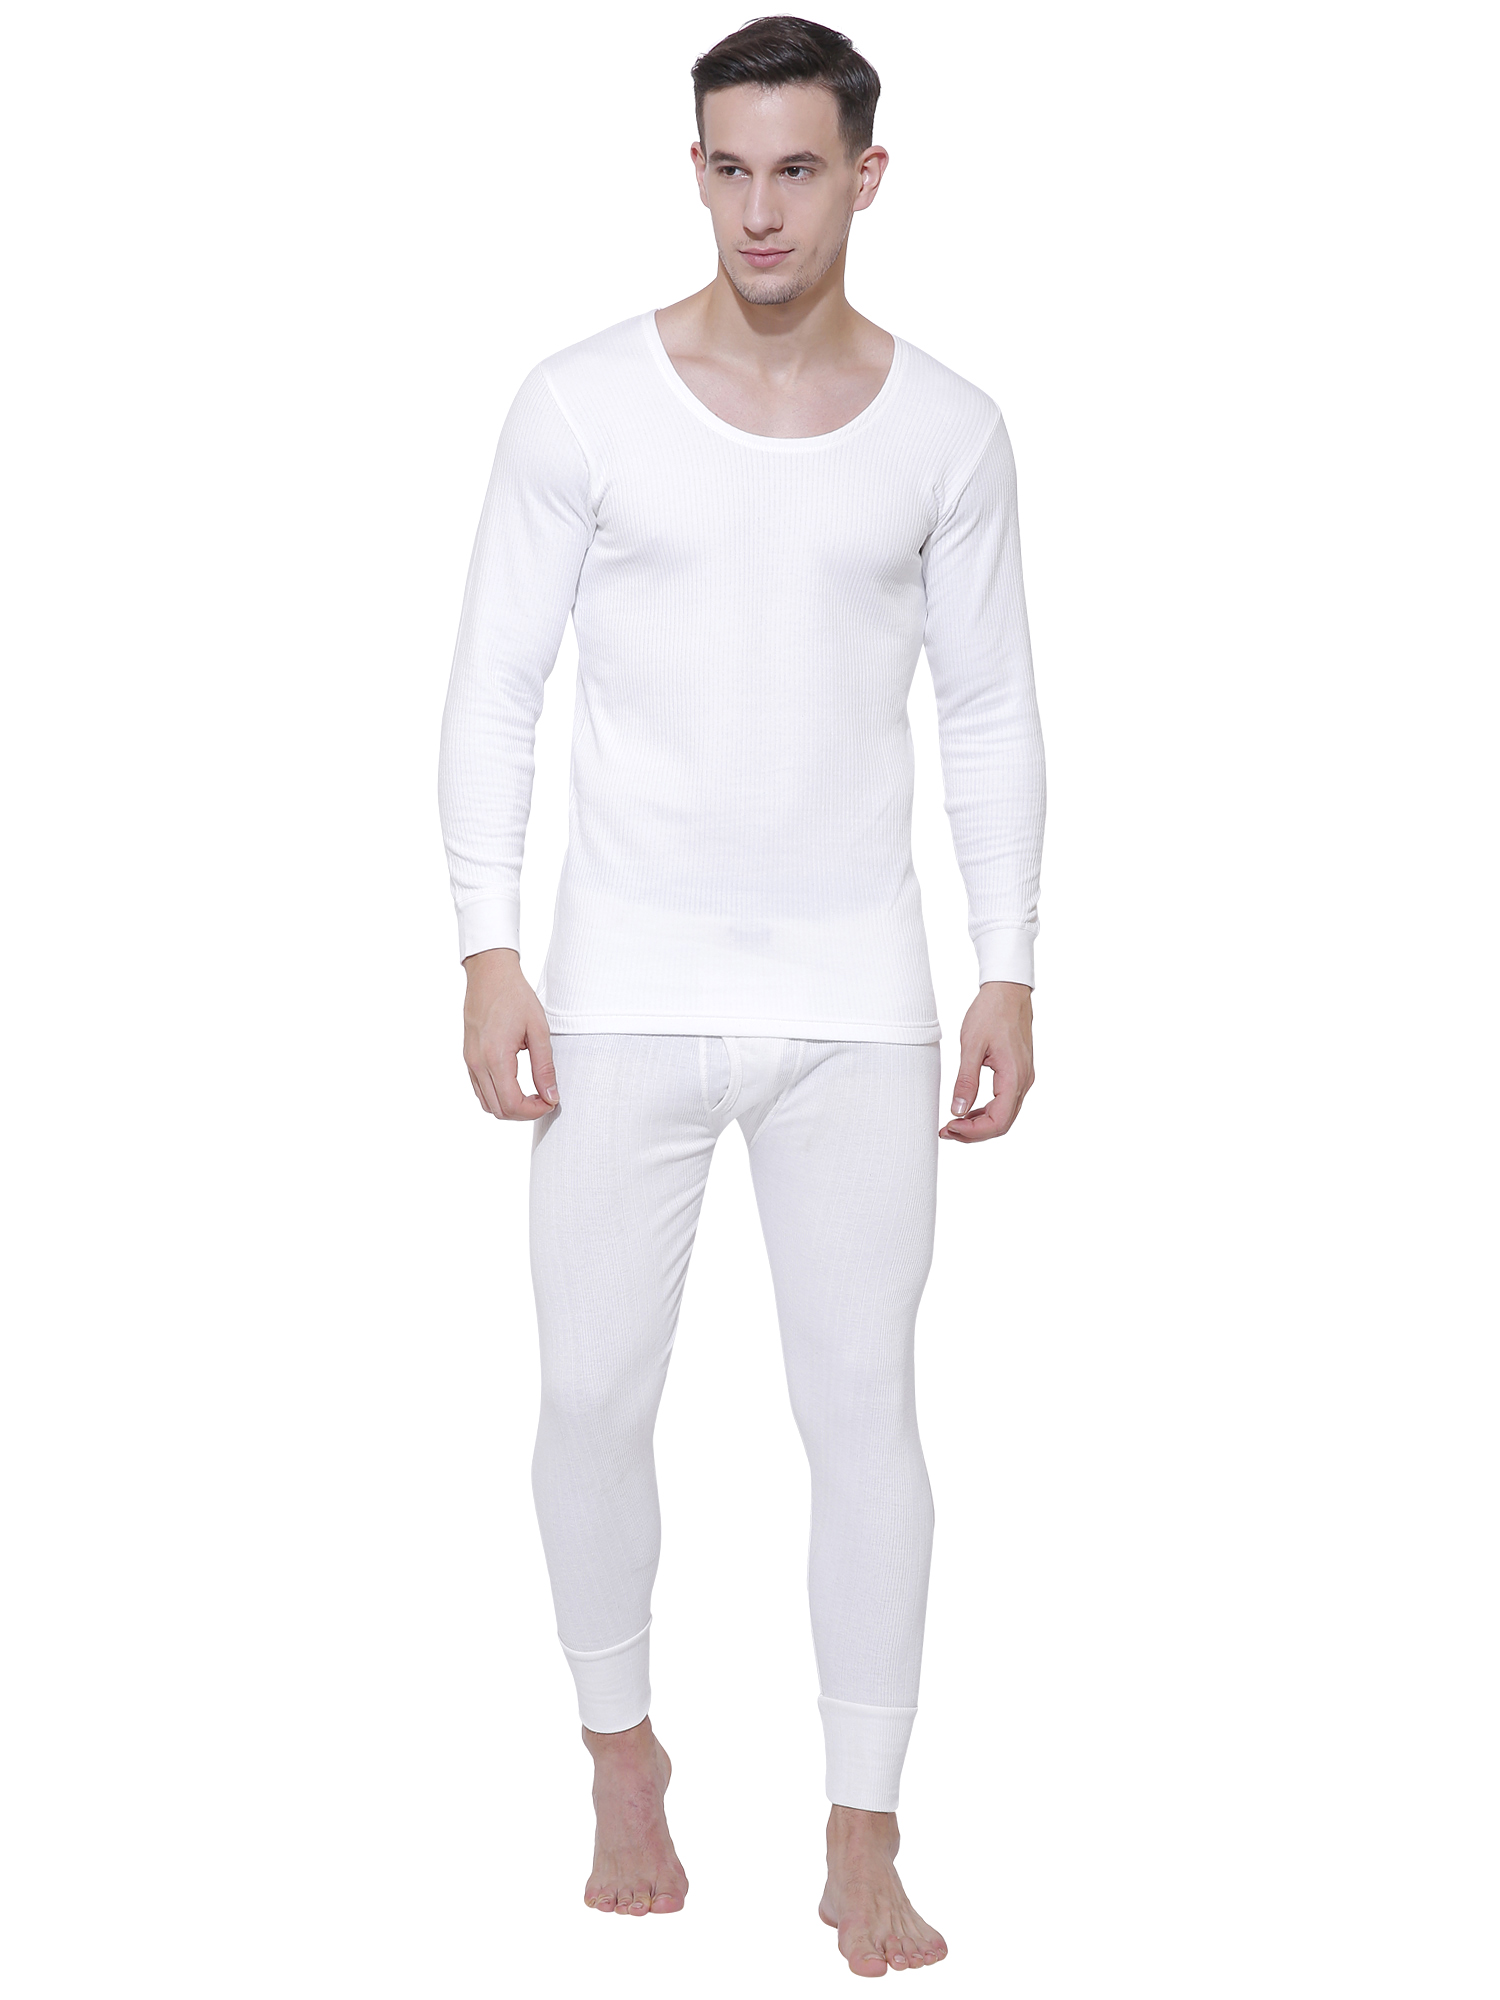 Buy Bodycare Insider Men's White Thermal Wear Online @ ₹390 from ShopClues